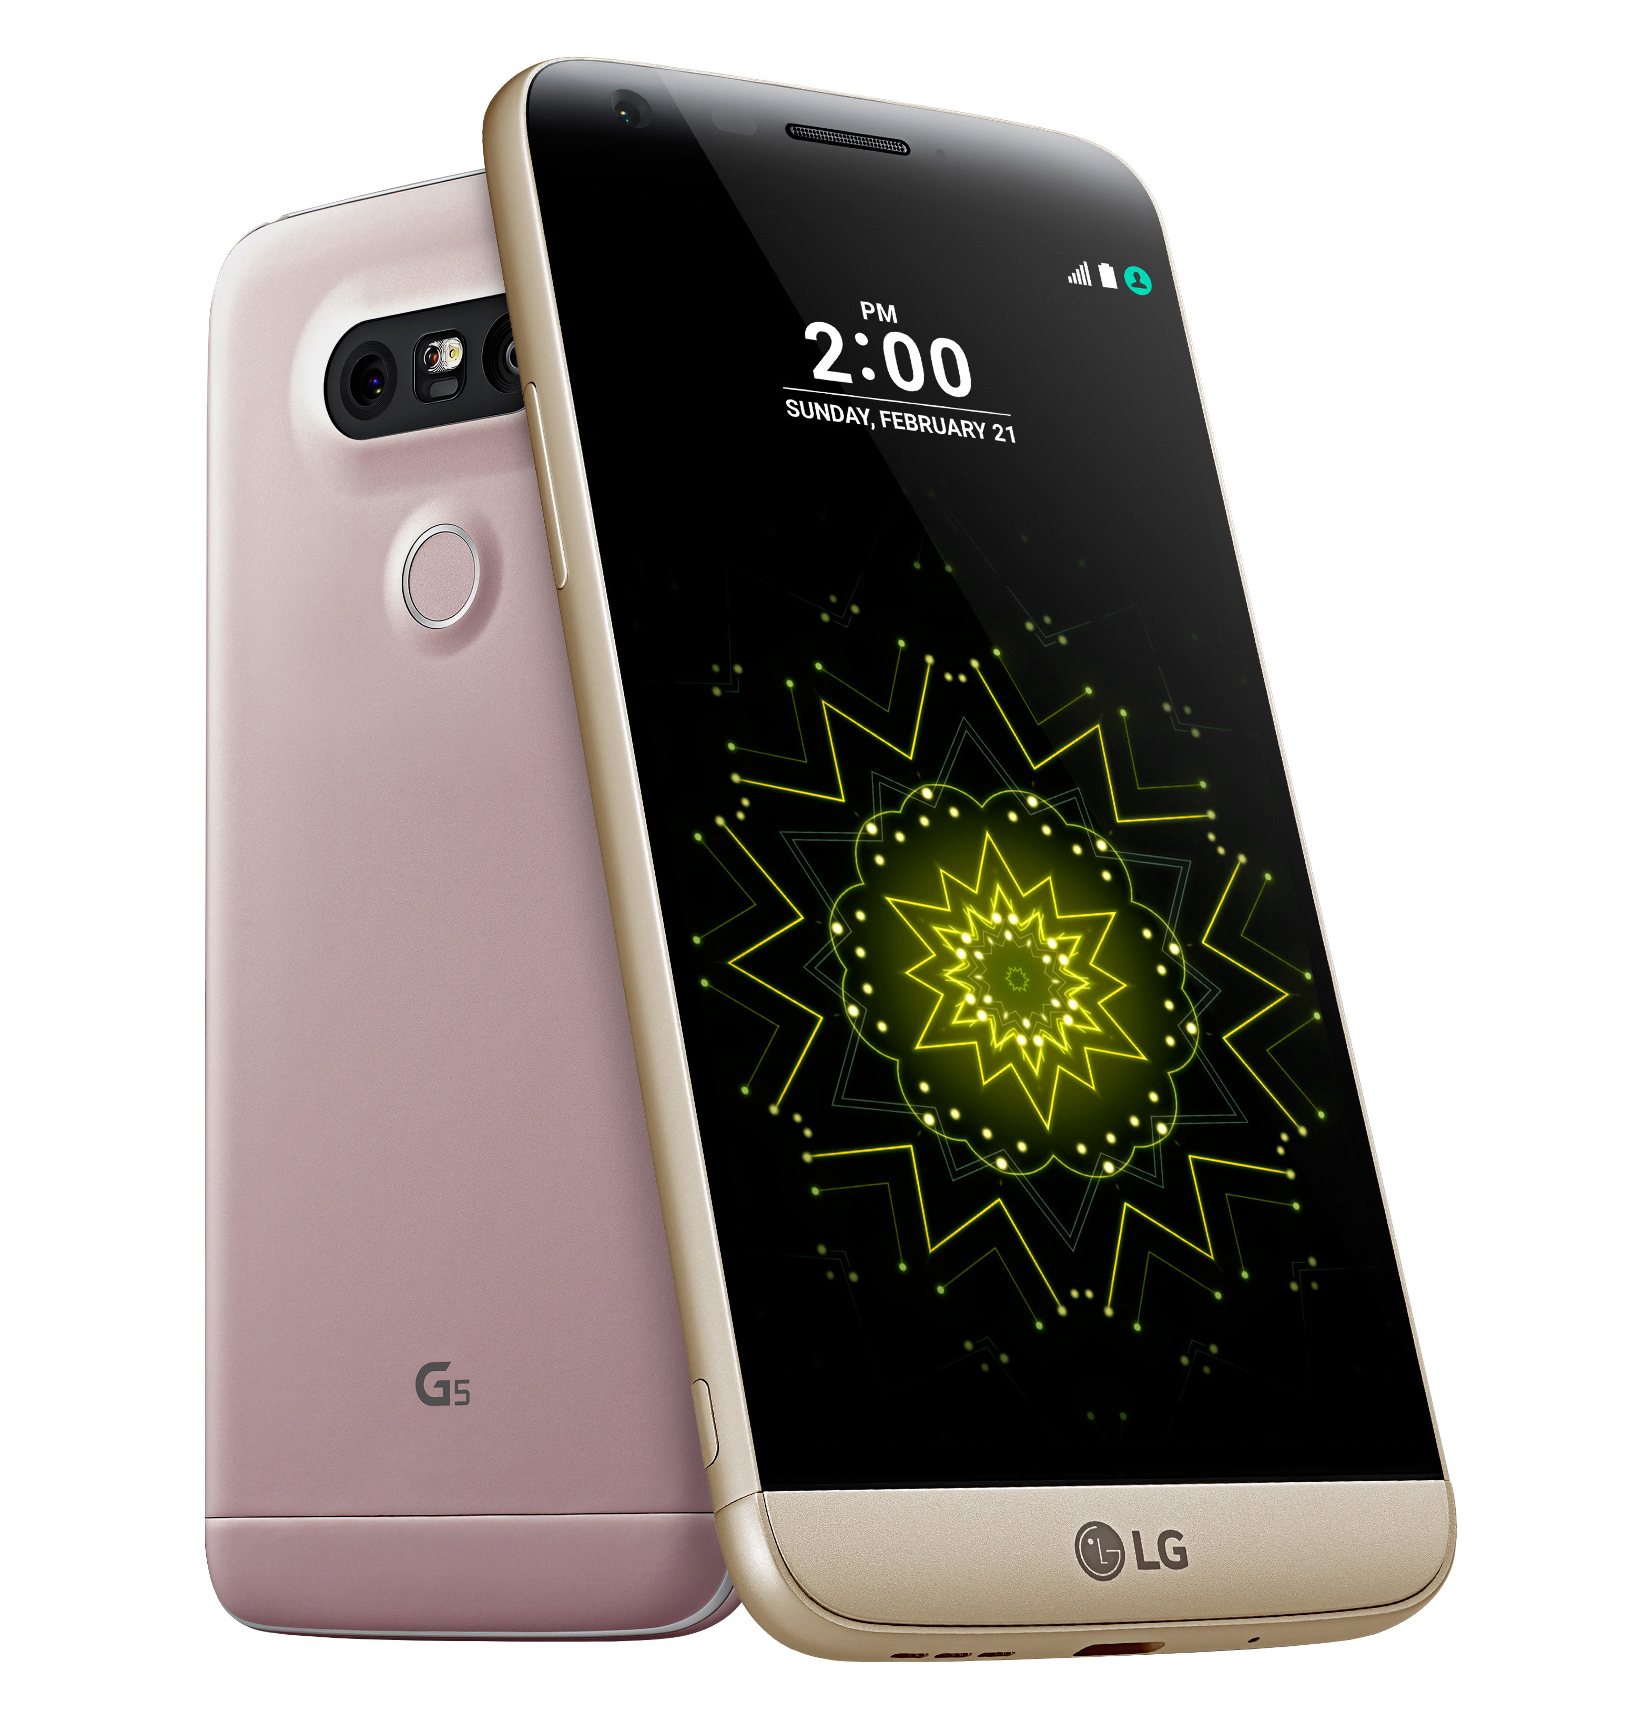 LG G5 SE - упрощенная версия флагмана LG G5